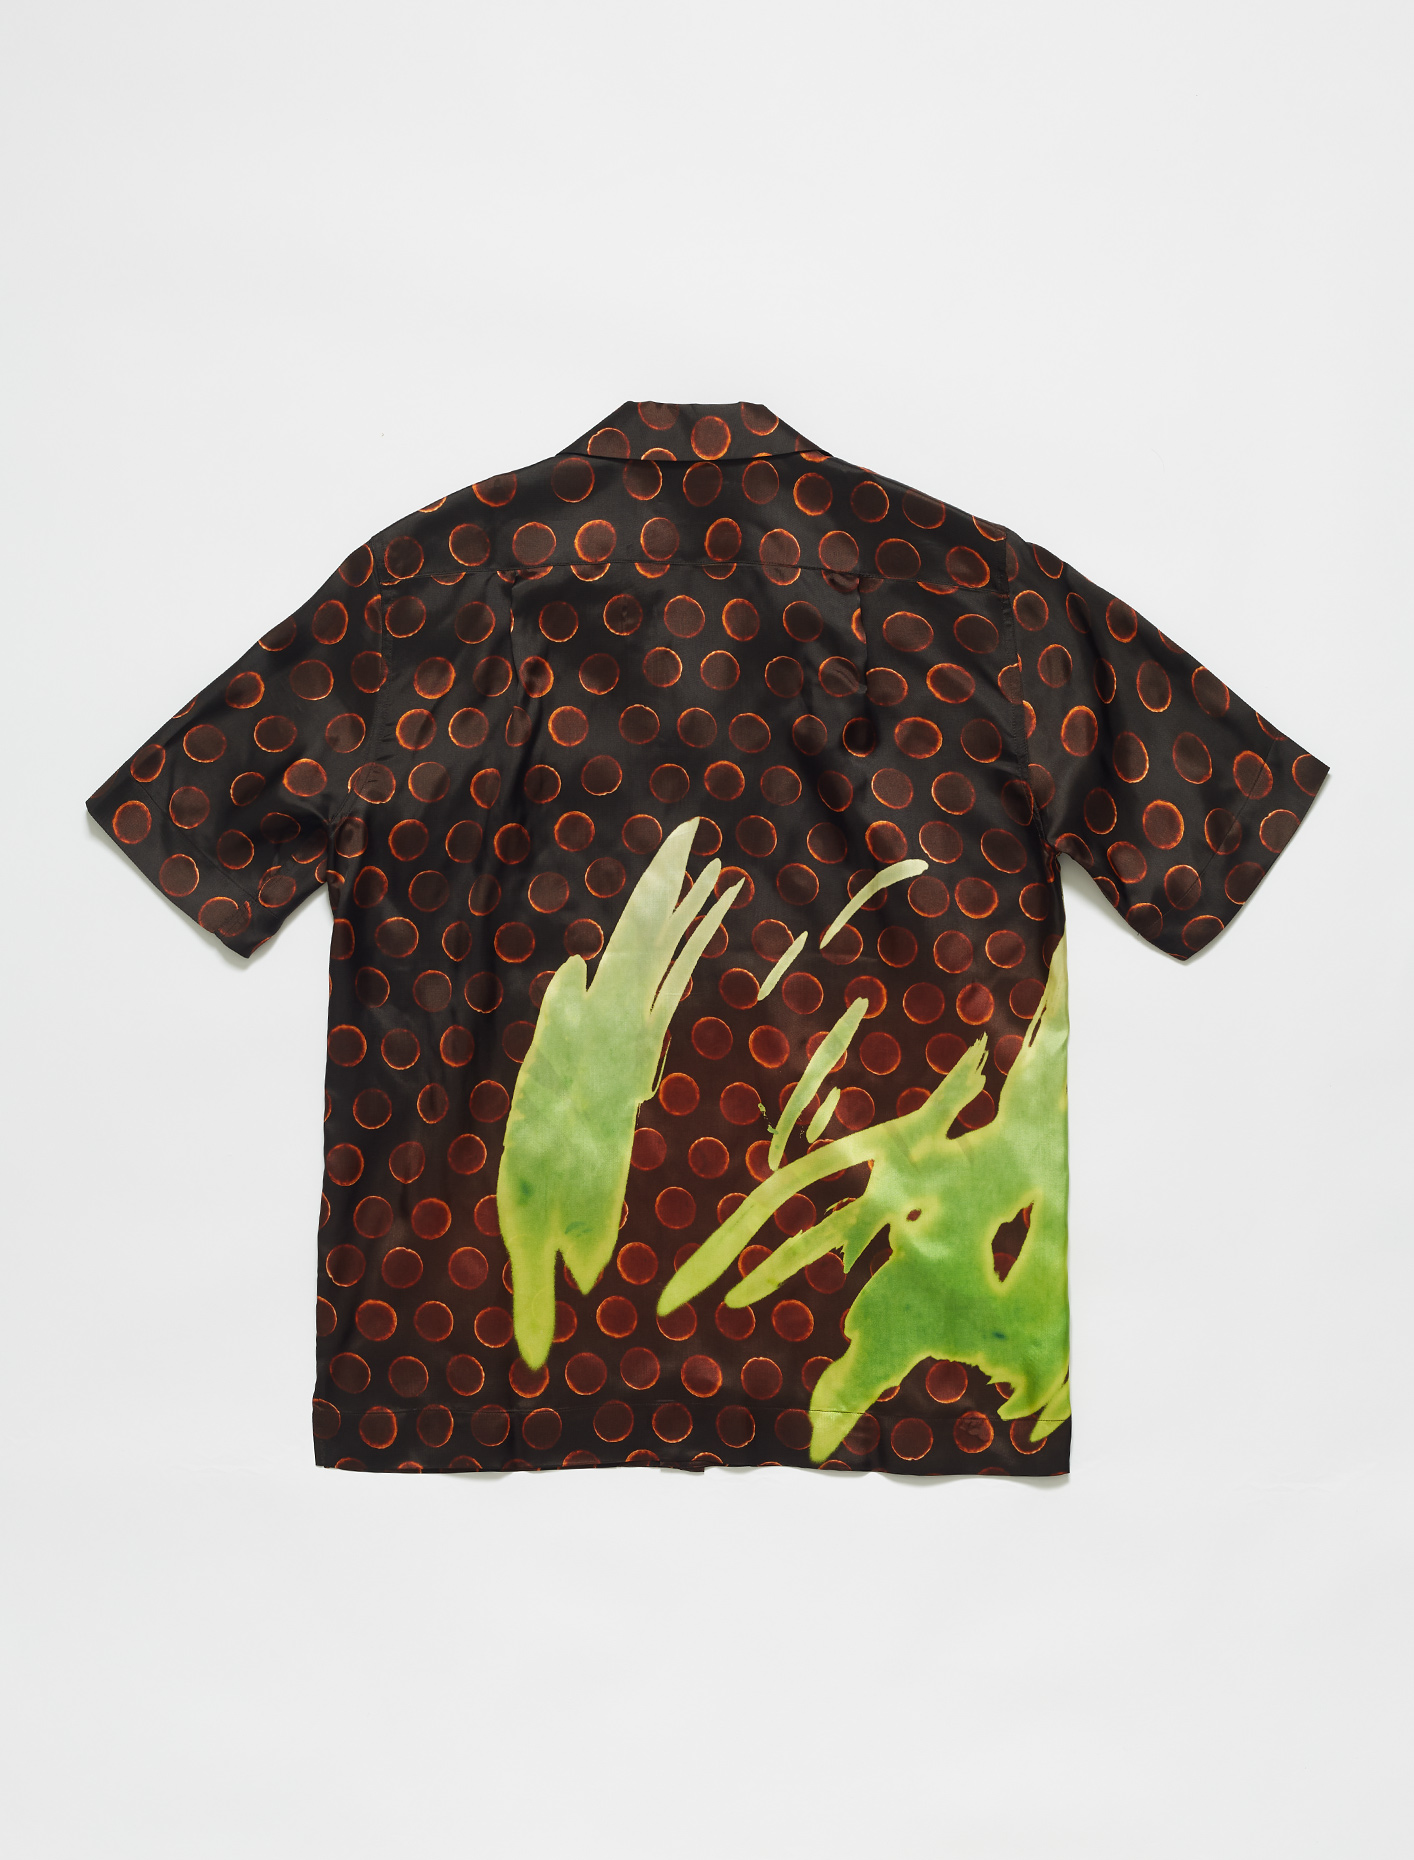 Dries Van Noten Carltone Len Lye Print Shirt in Brown & Lime | Voo